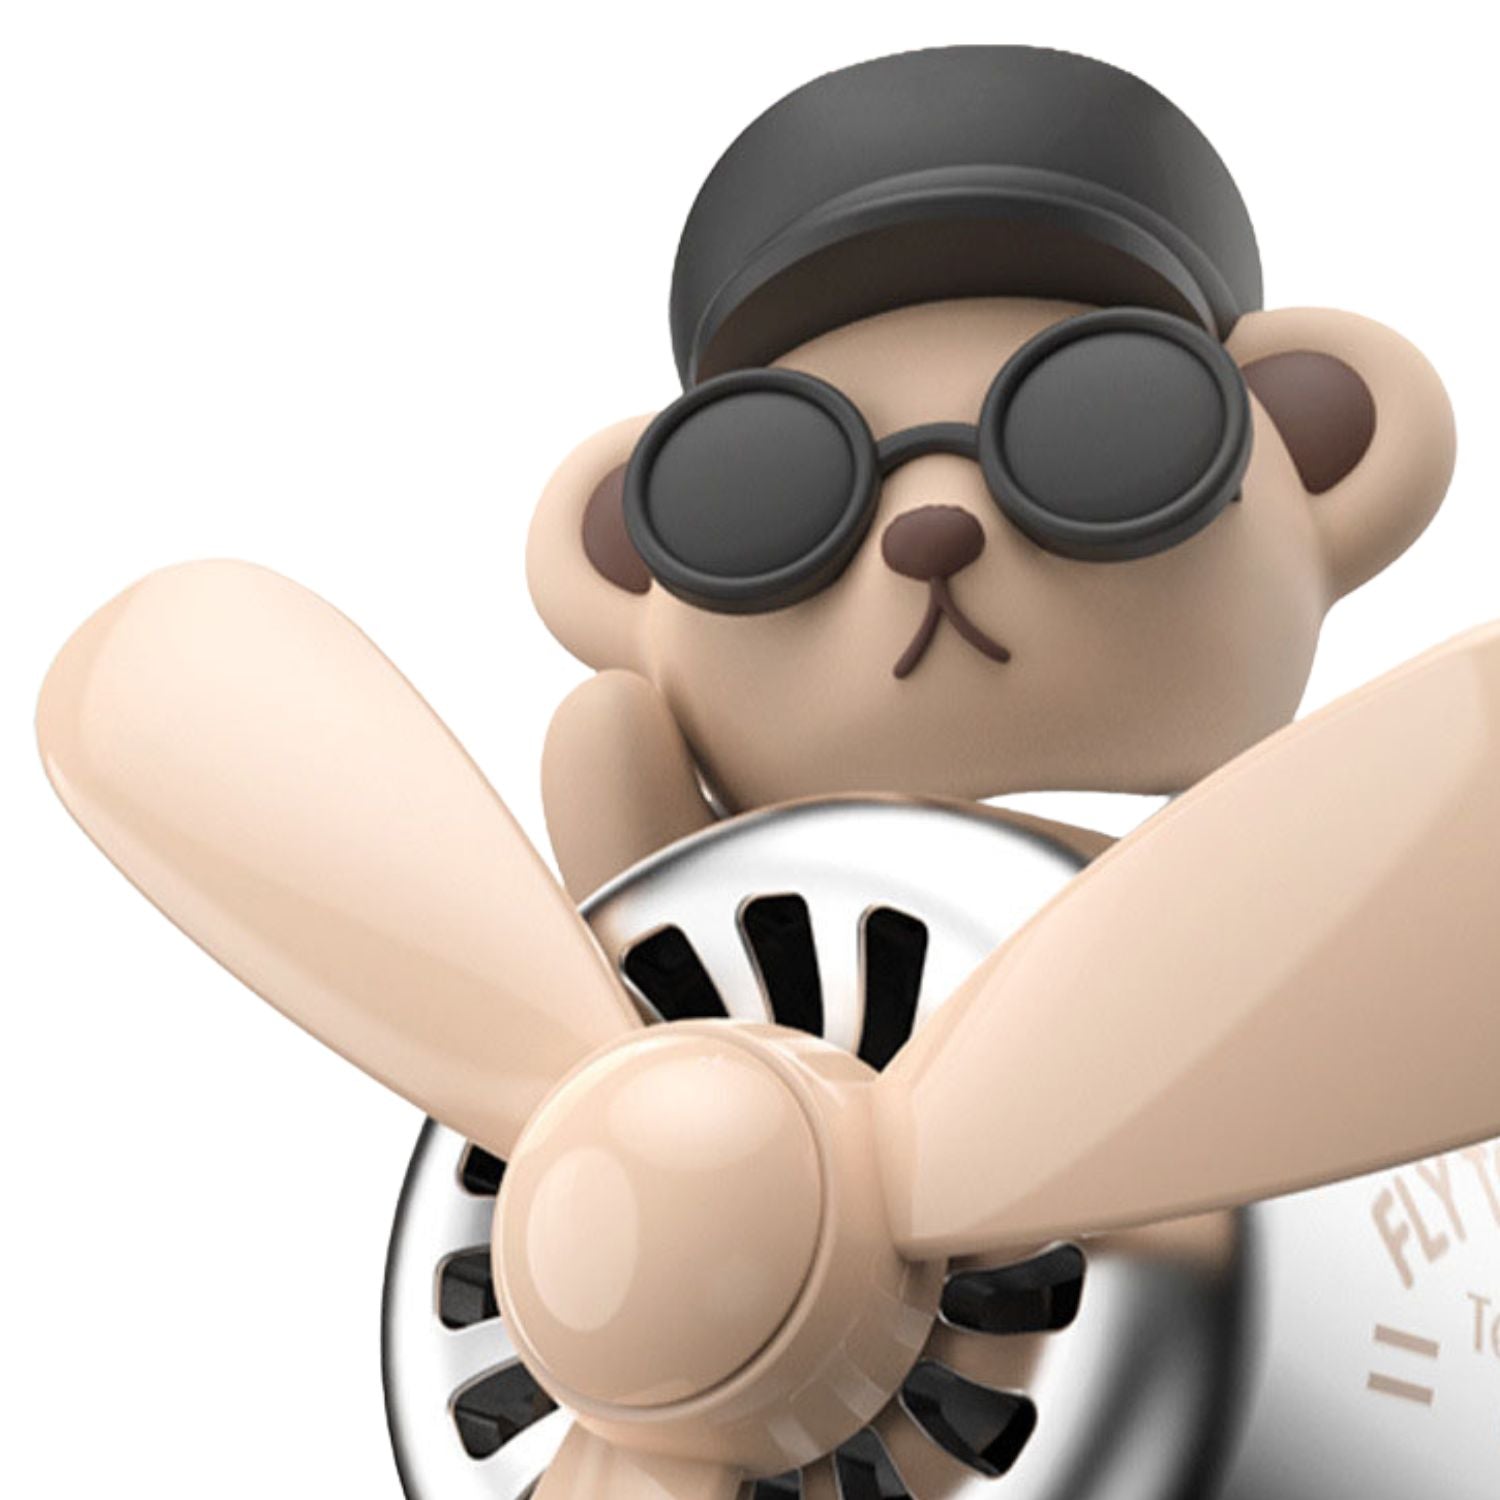 Teddy Bear Pilot